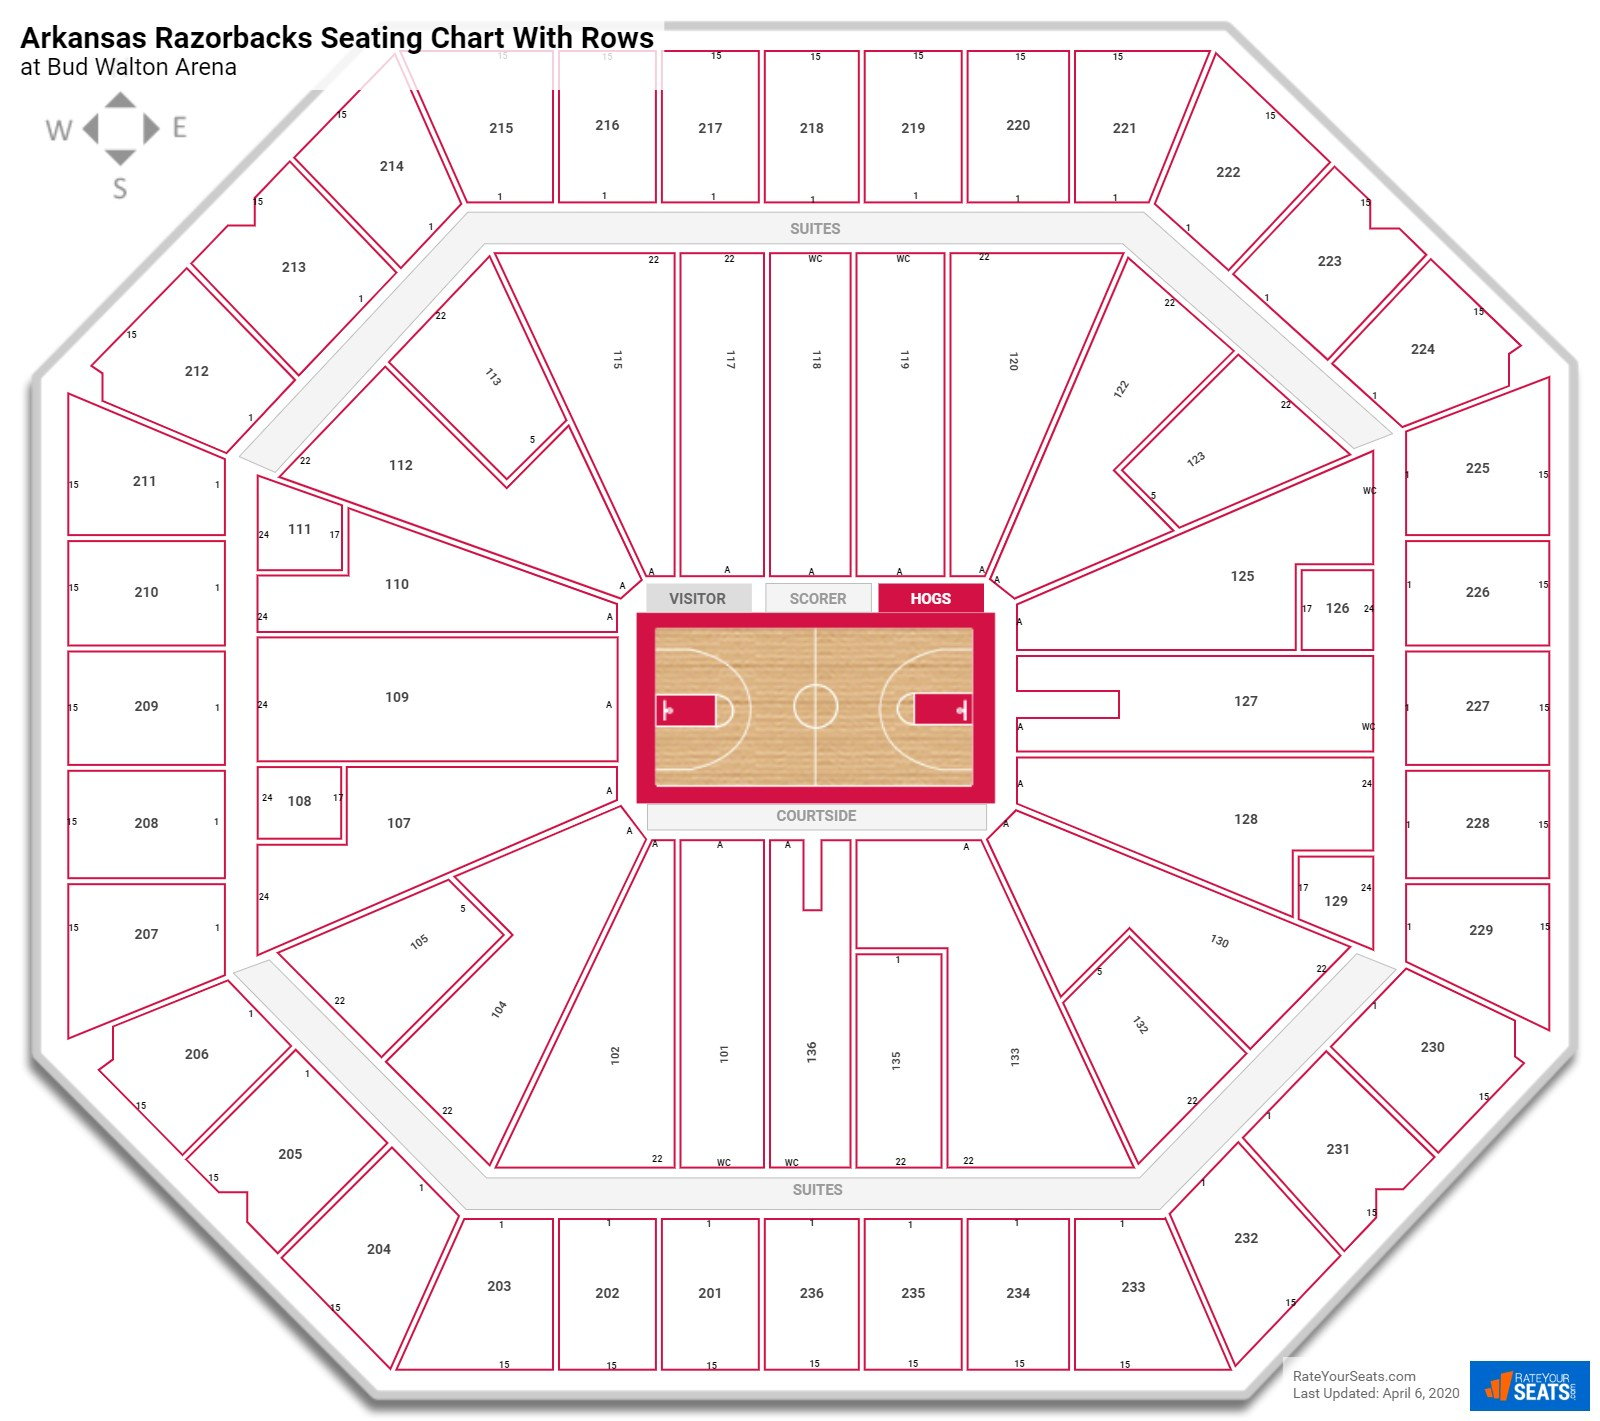 Bud Walton Arena seating chart with row numbers